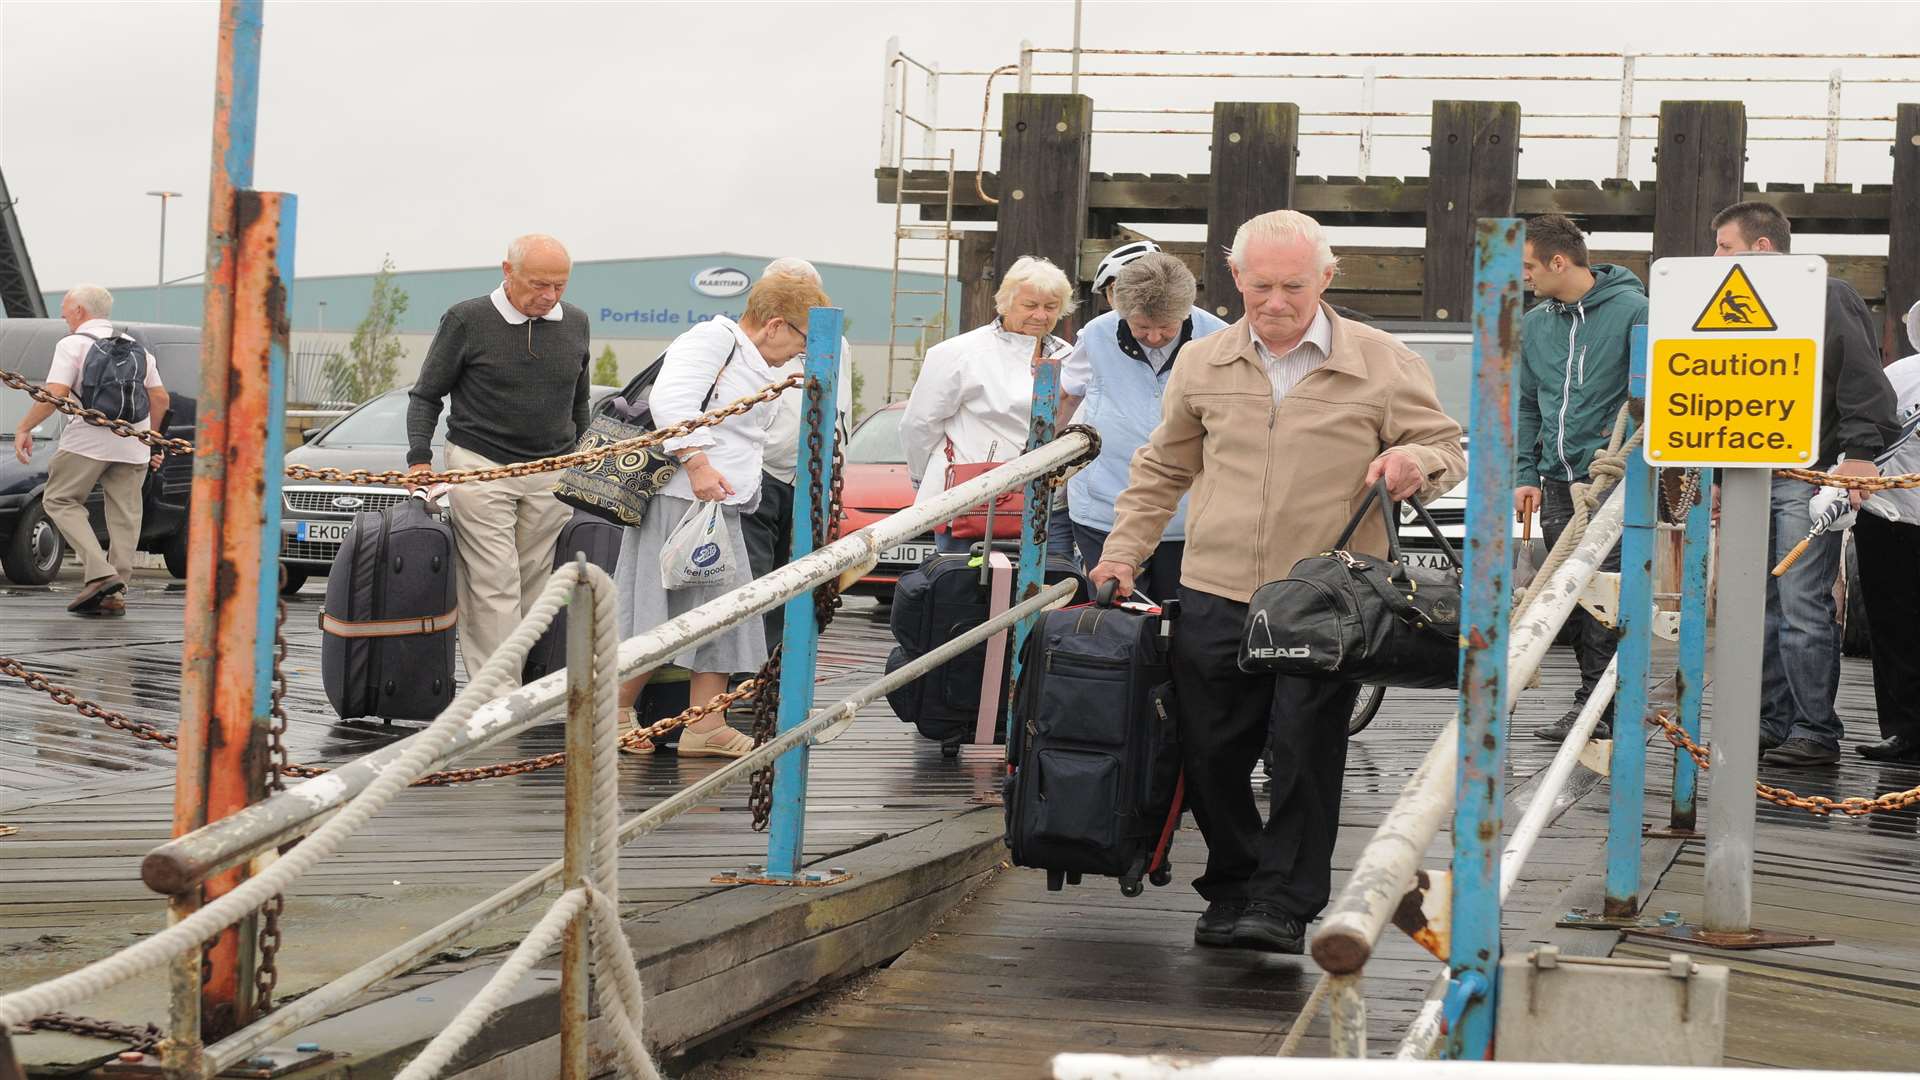 Tilbury Ferry passengers at Tilbury